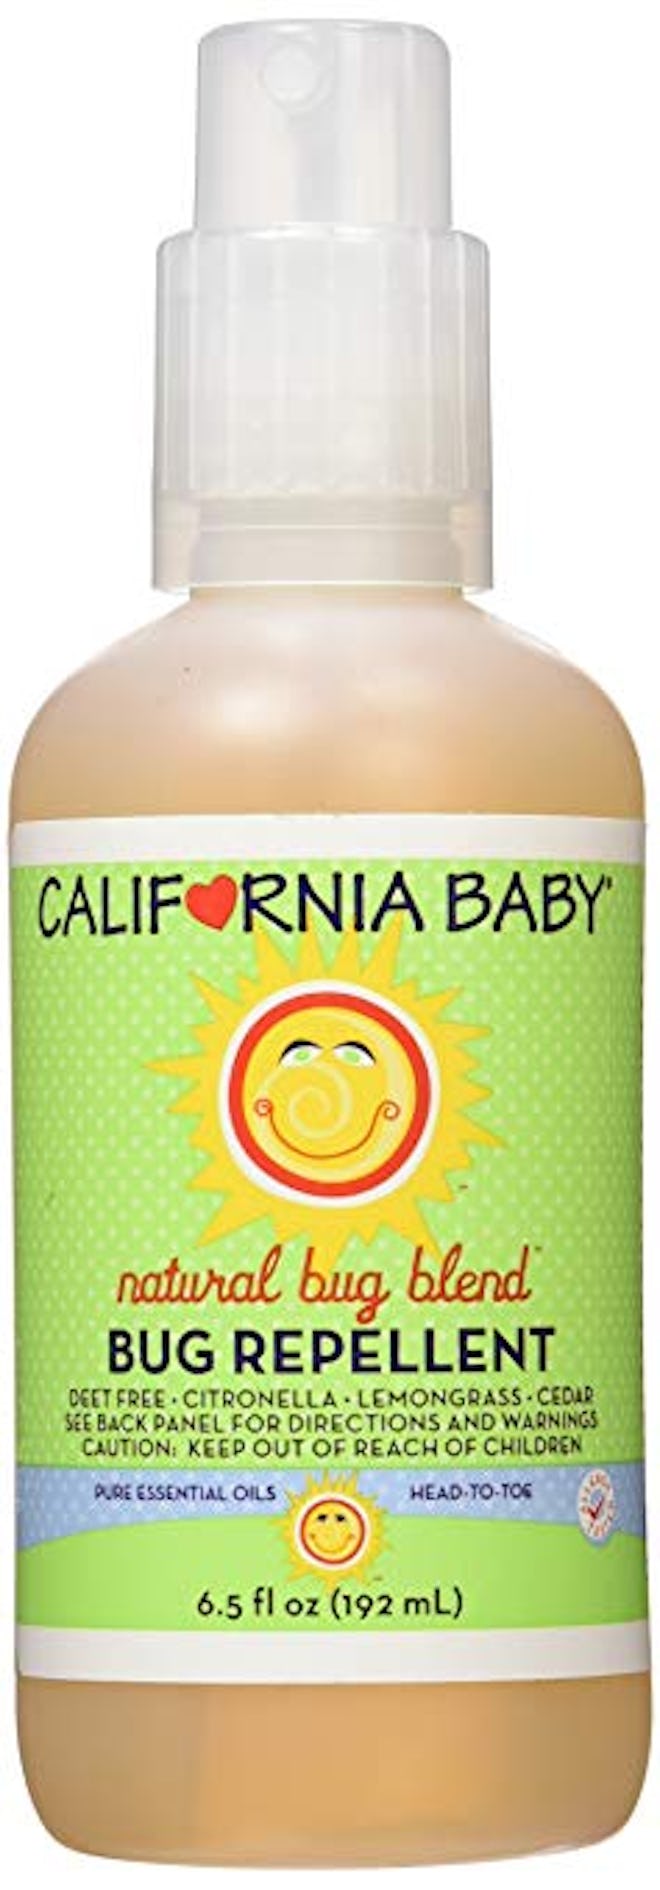 California Baby Natural Bug Blend Bug Repellent Spray